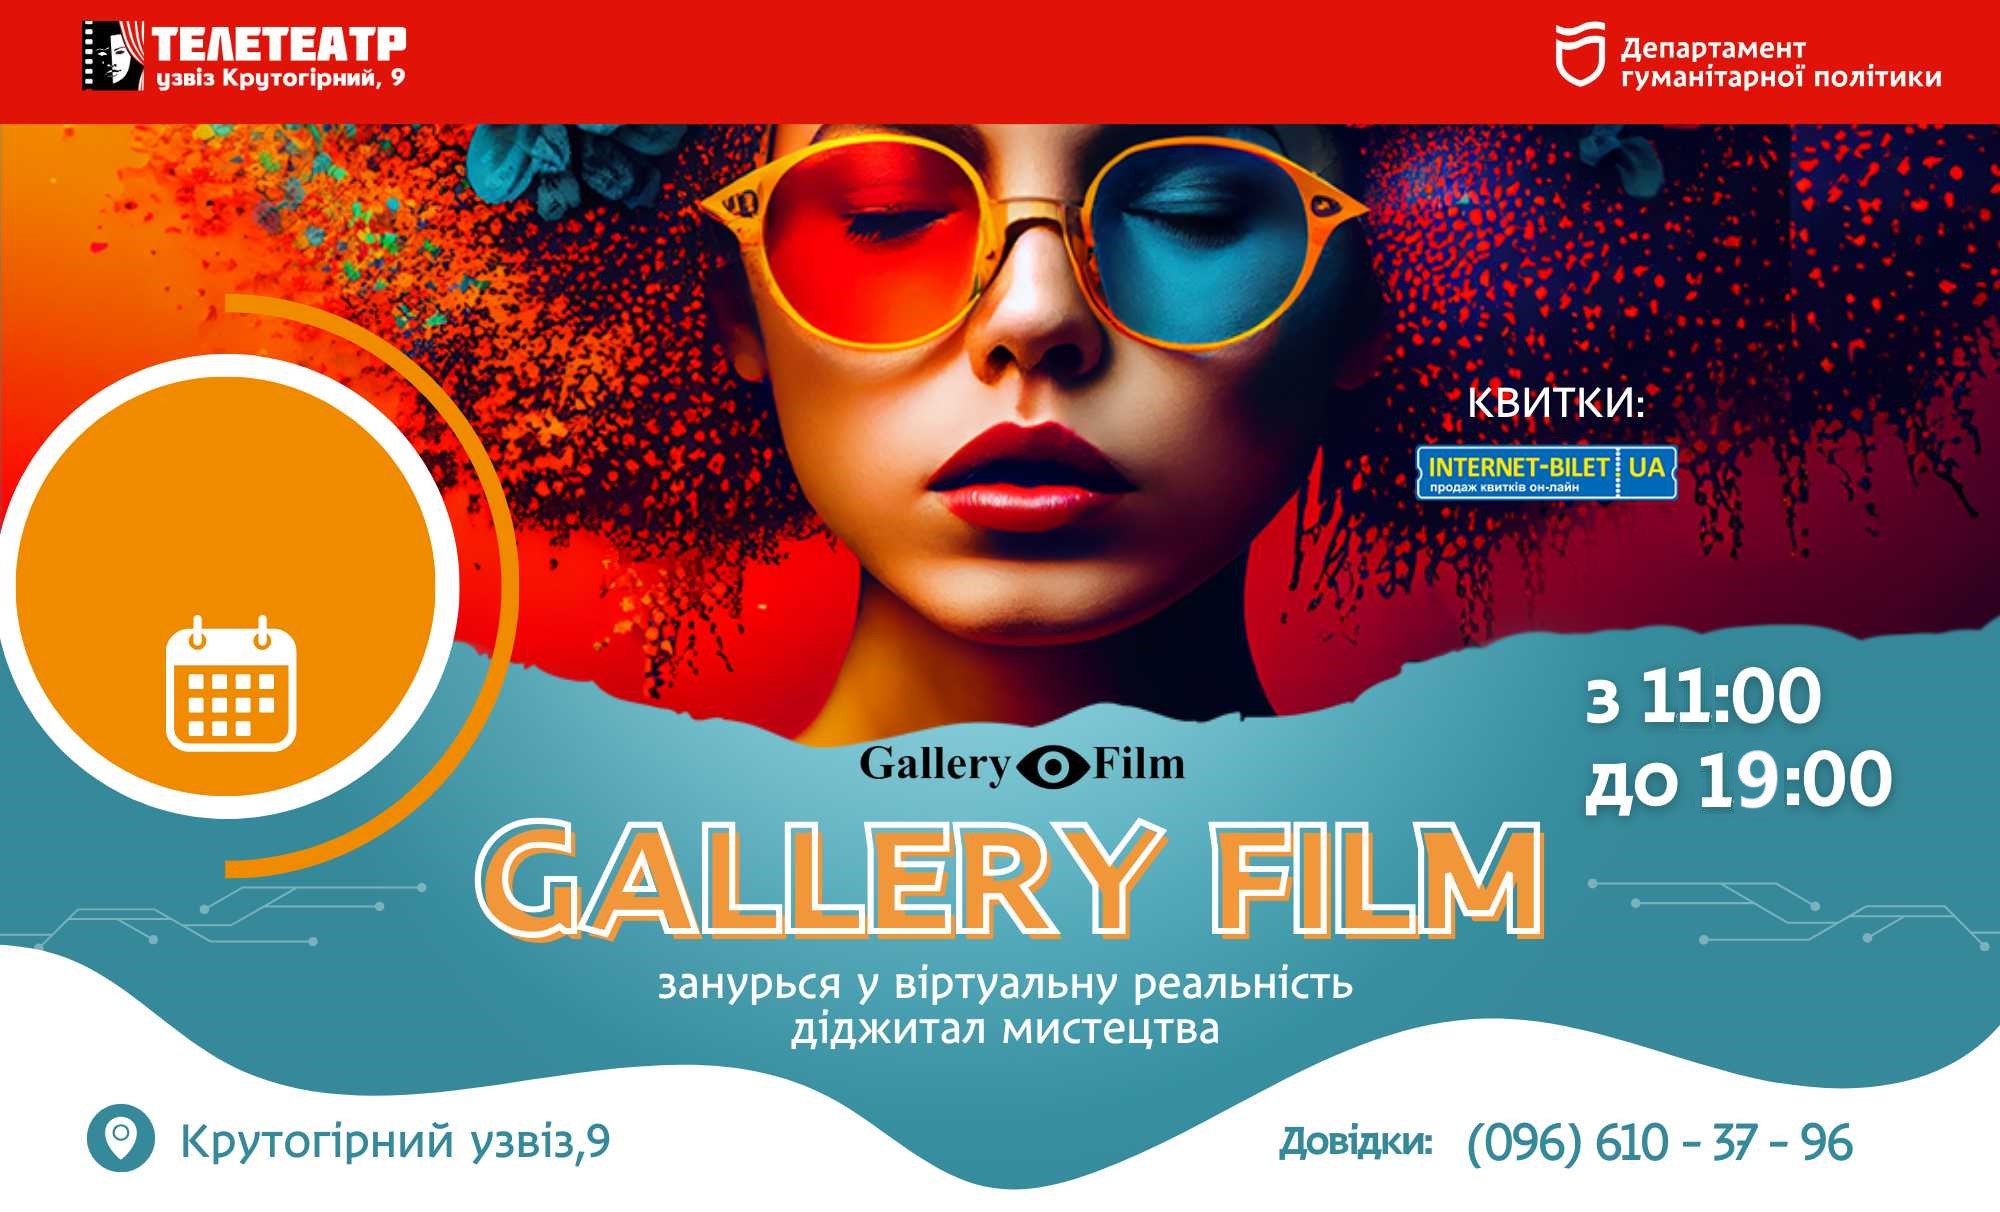 Проекційне шоу “Gallery Film” у Телетеатрі